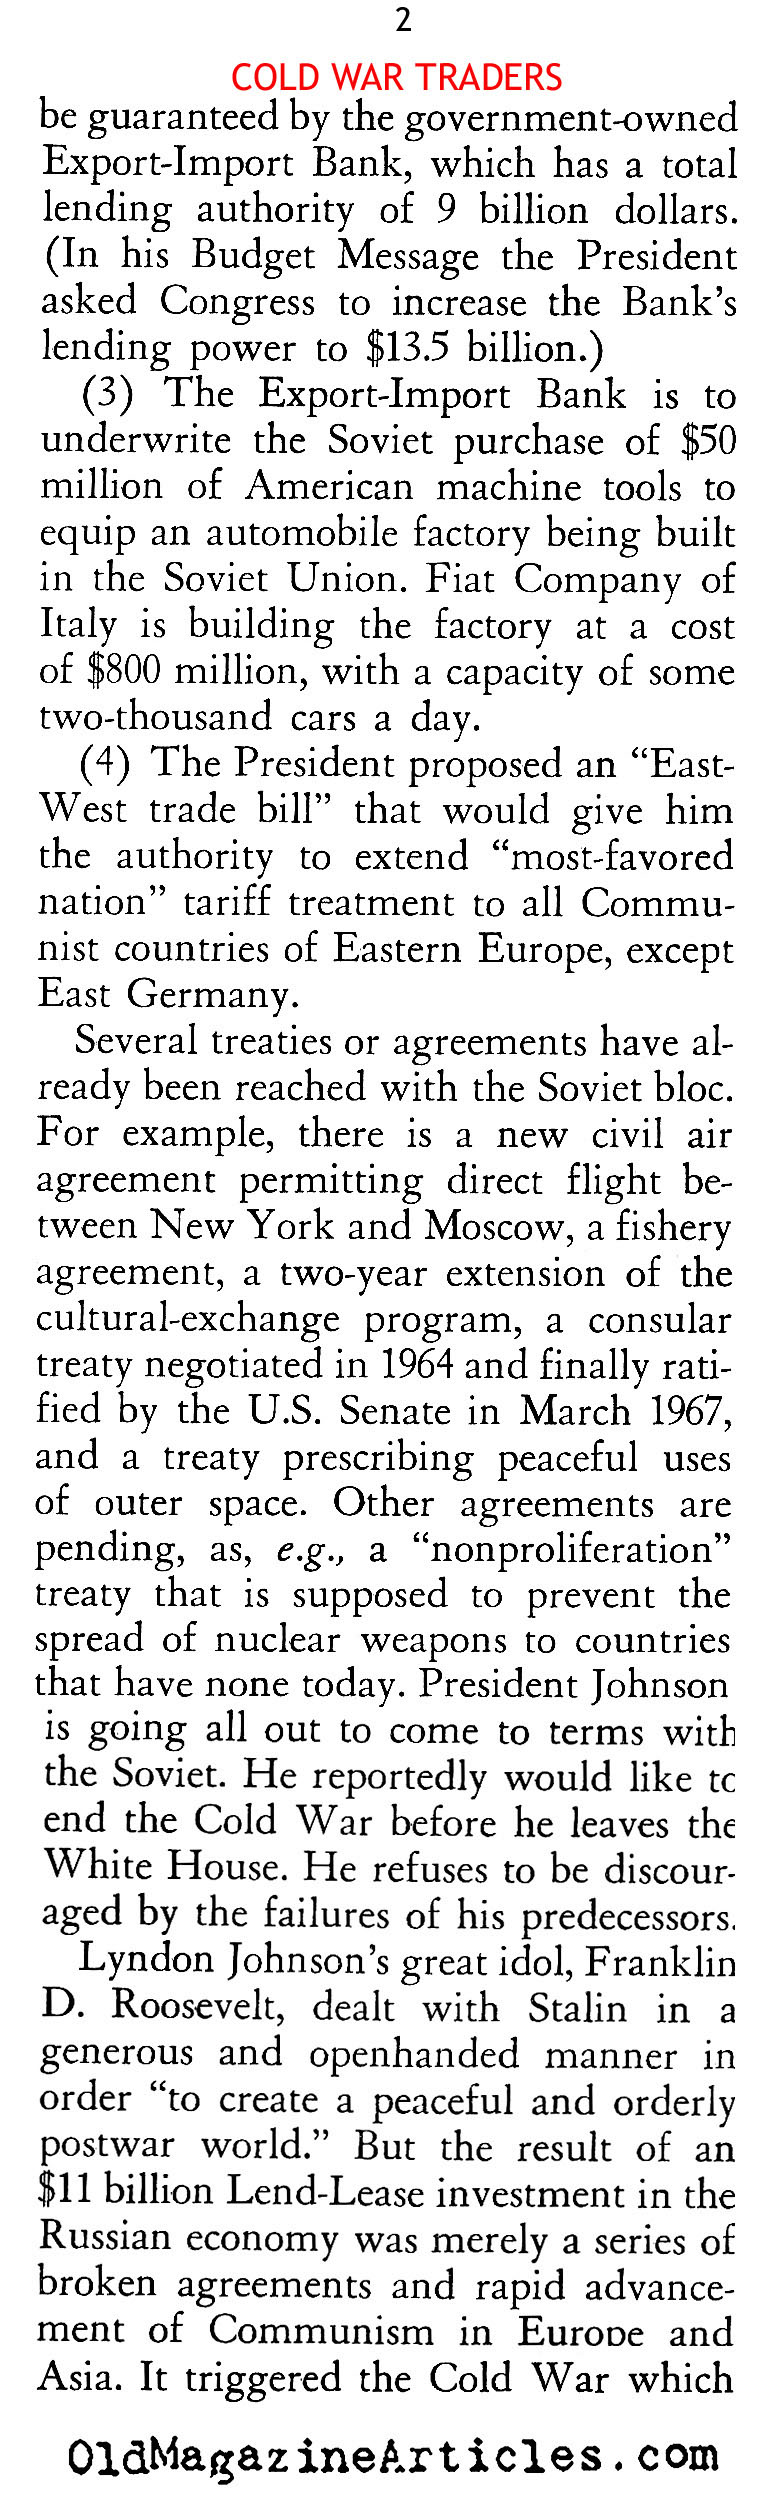 Prolonging The Vietnam War<BR> (American Opinion Magazine, 1967)